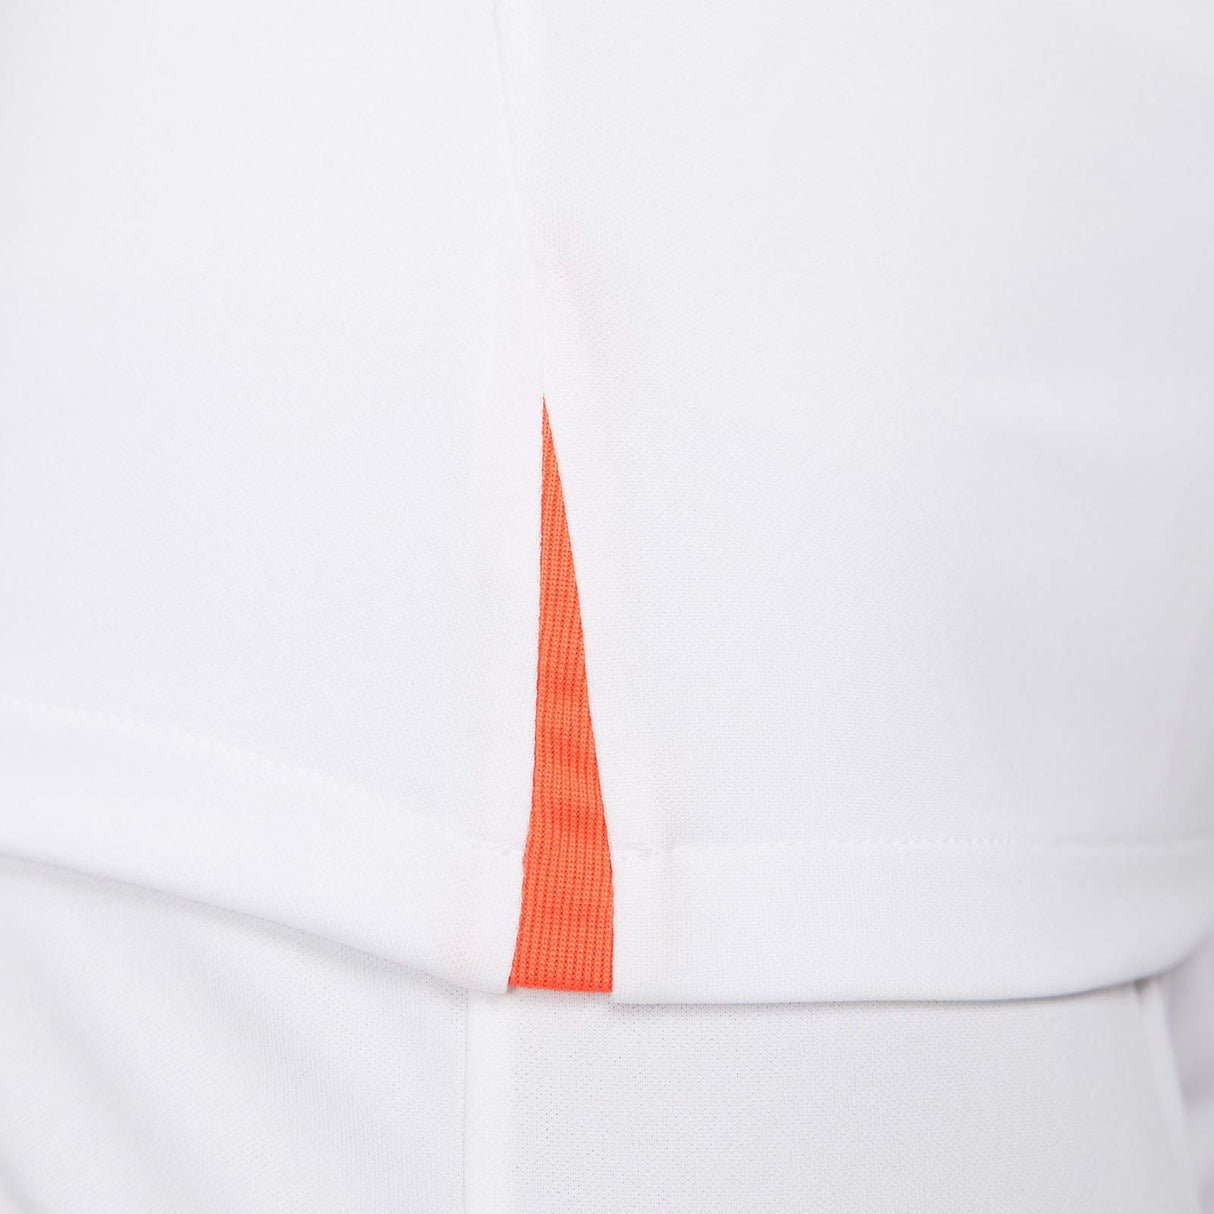 Nike Dri-FIT Strike Womens Short-Sleeve Top